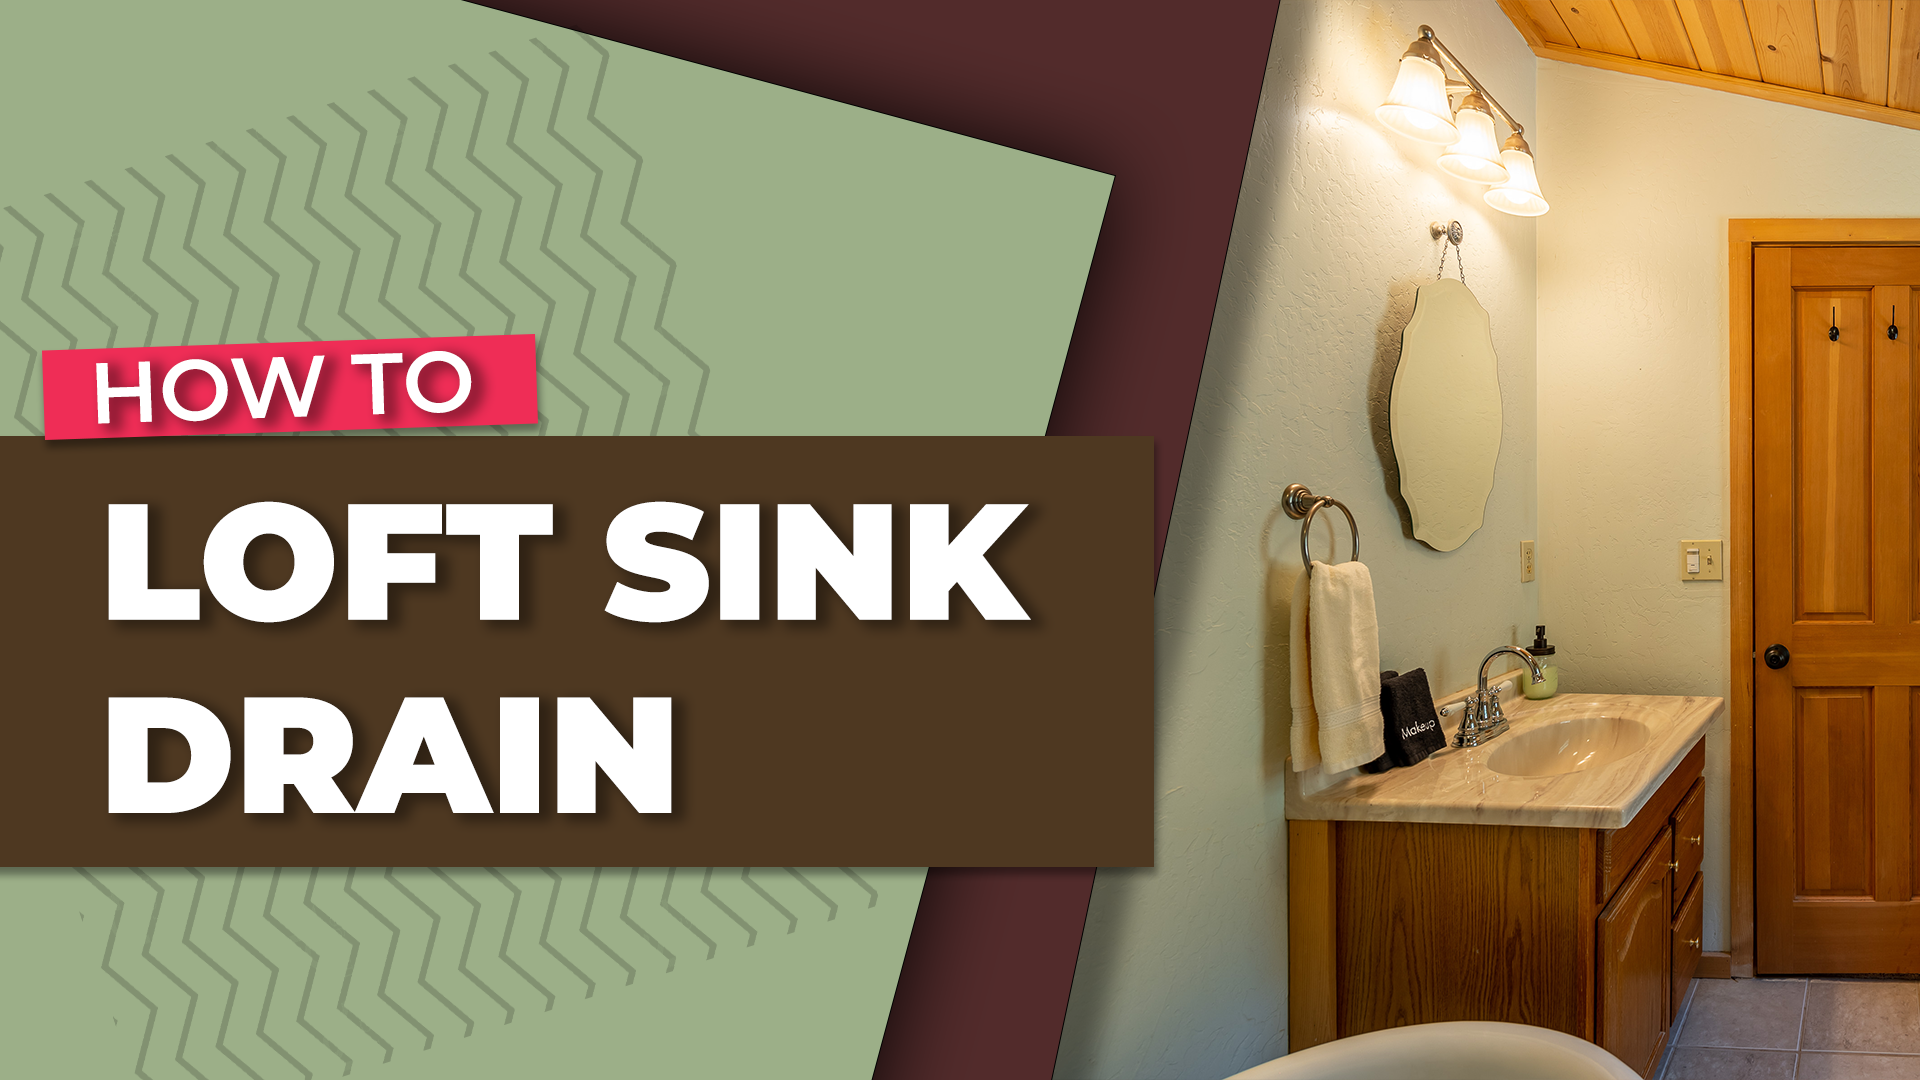 The Loft Sink Drain